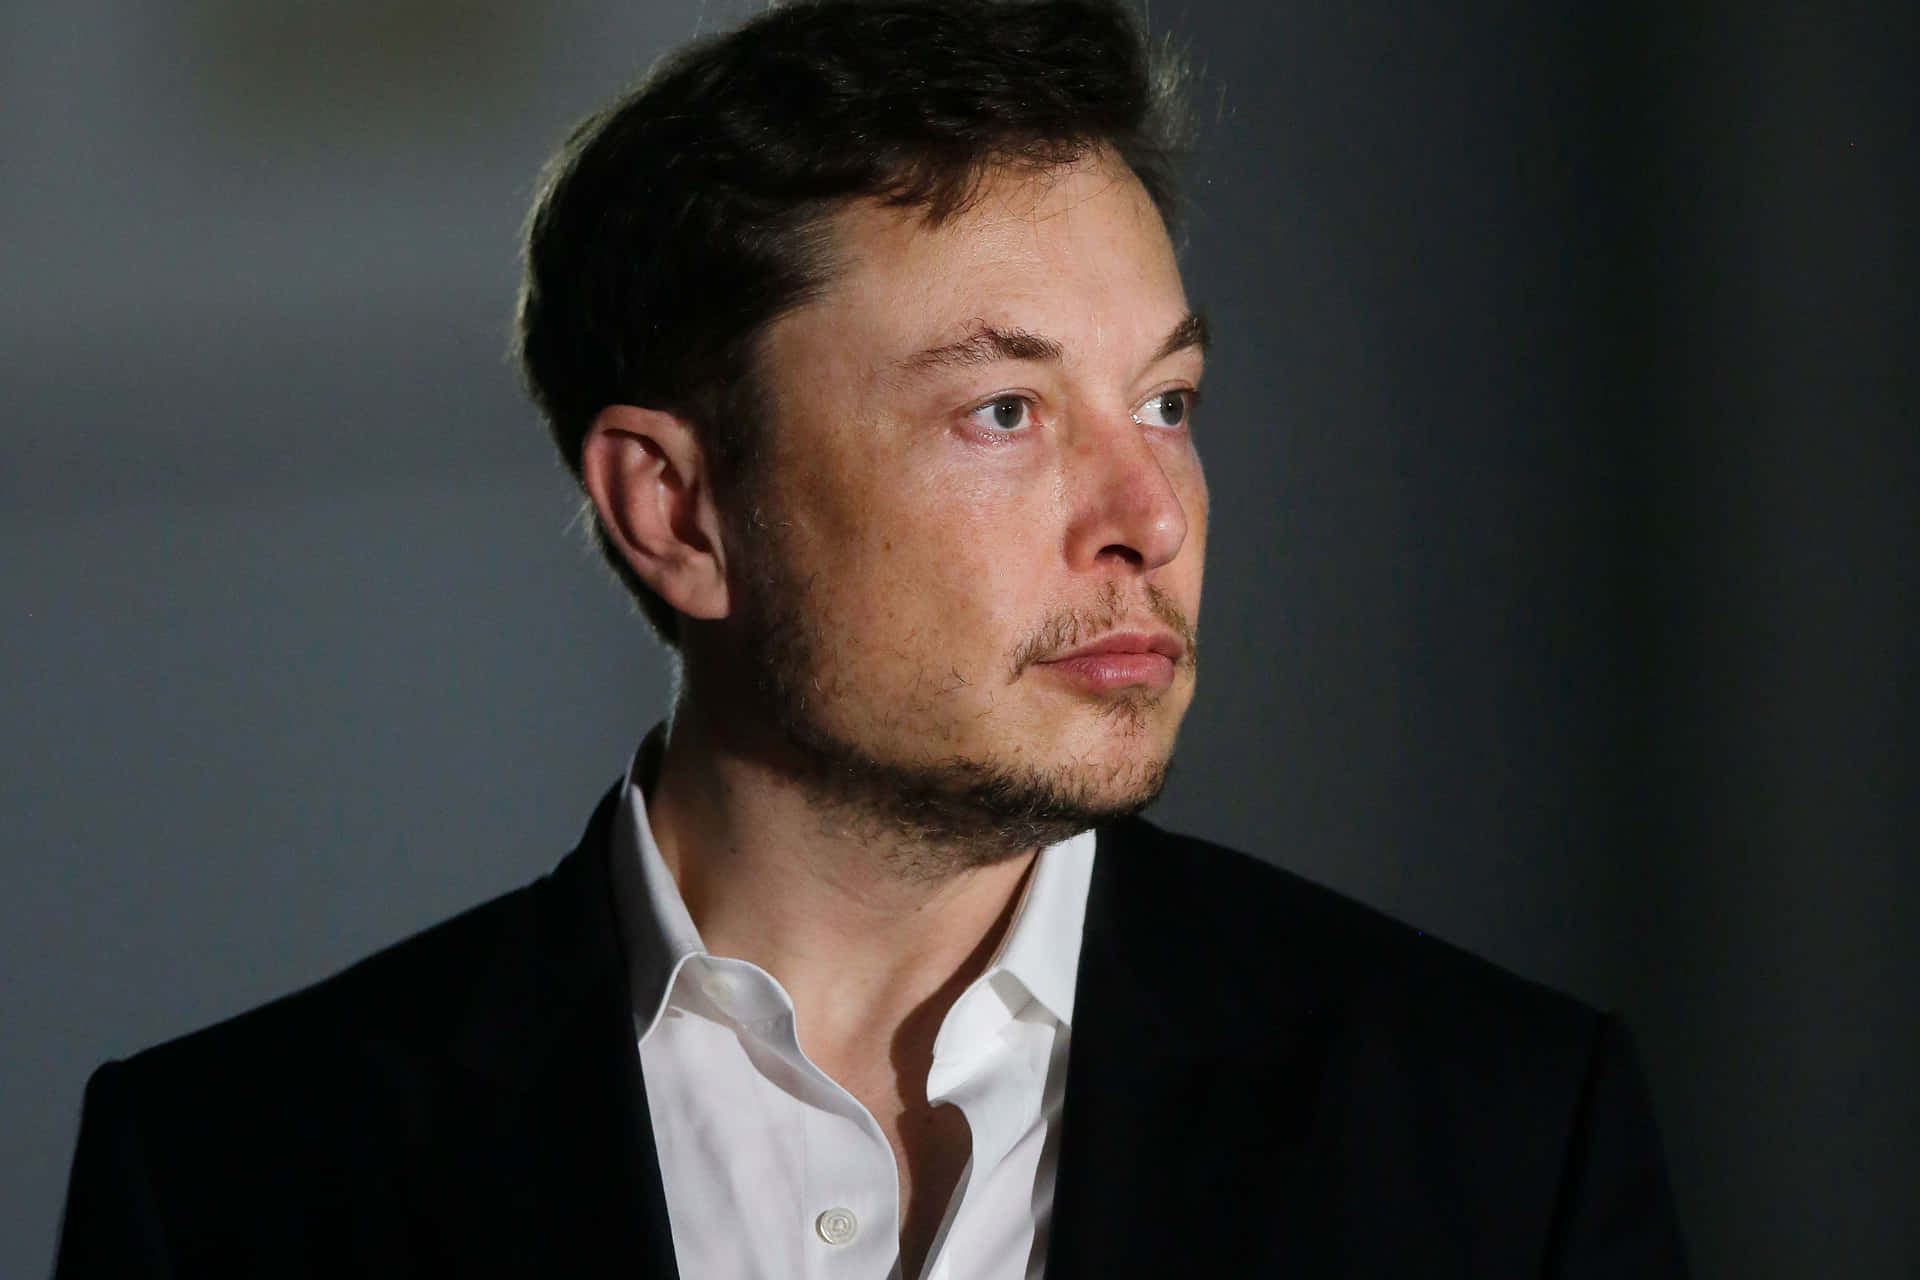 Visionarioemprendedor Elon Musk